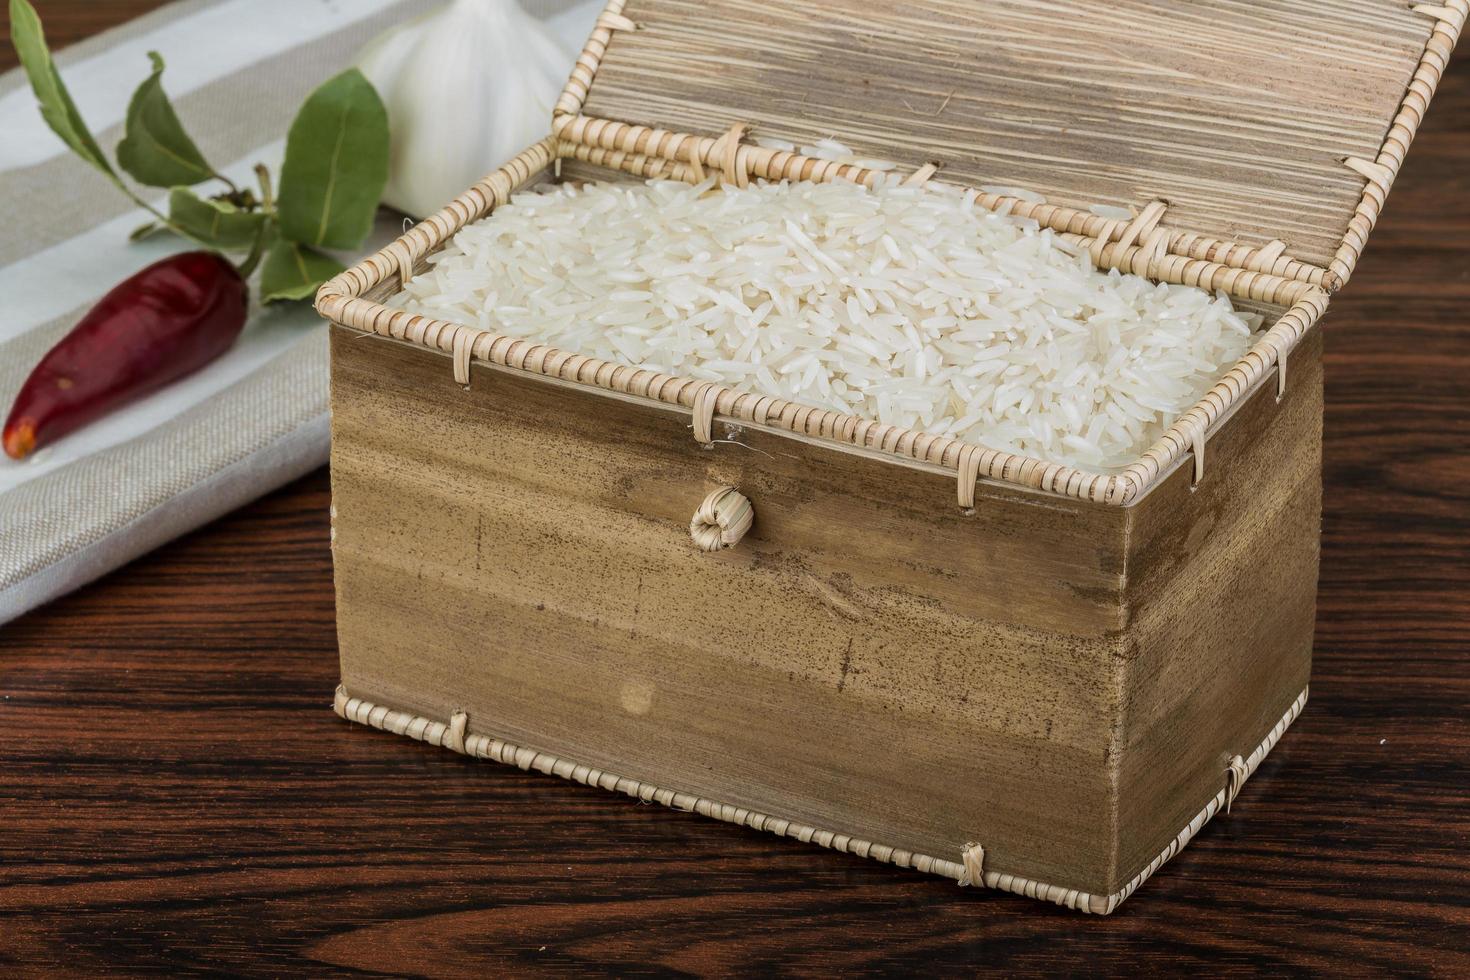 riz basmati sur bois photo